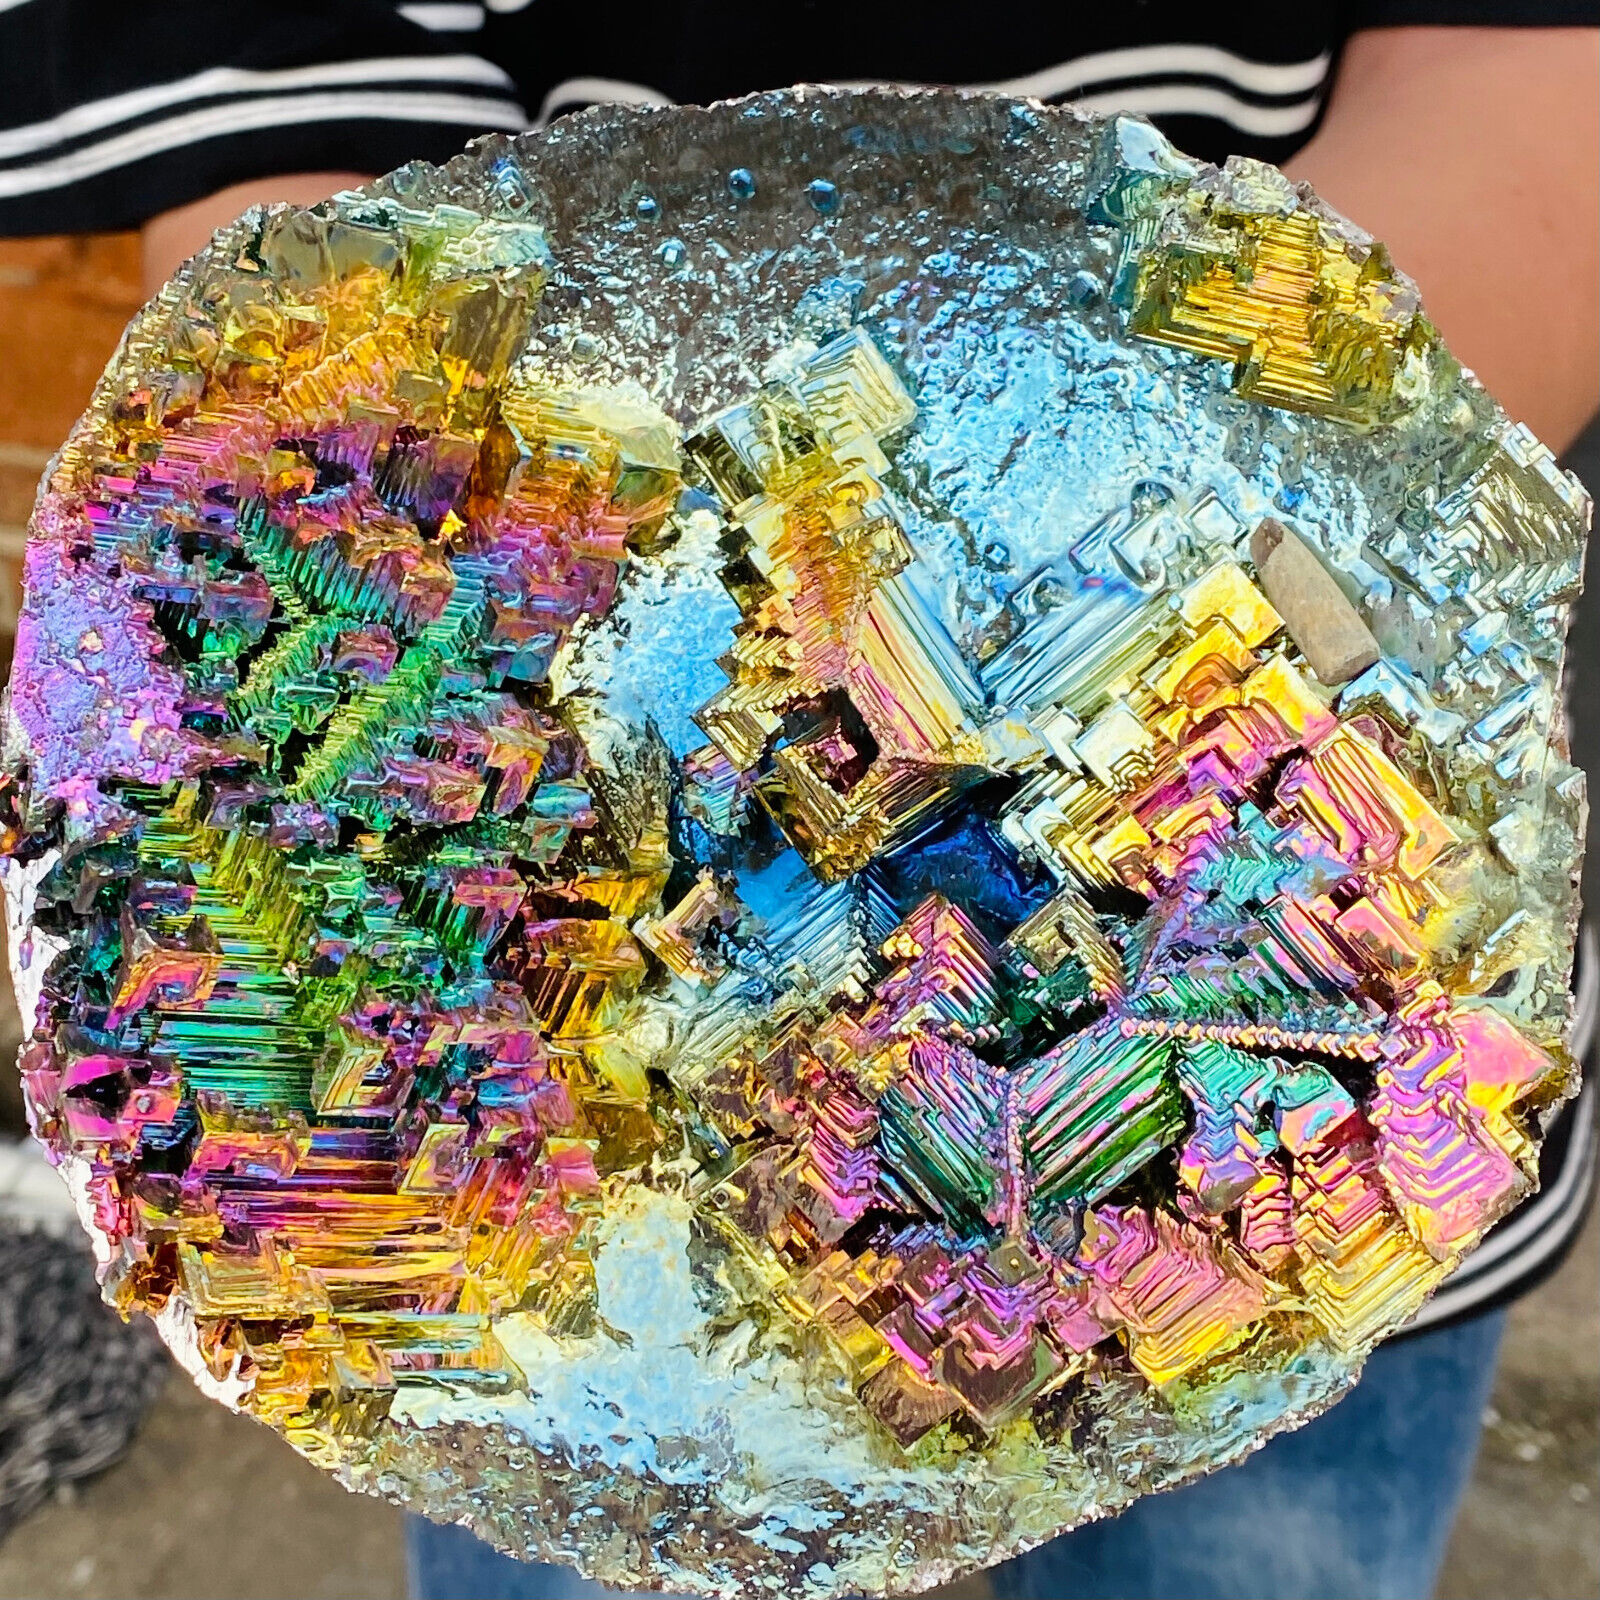 2.7LB Rainbow Bismuth ore Crystal titanium Metal Mineral Specimen point healing